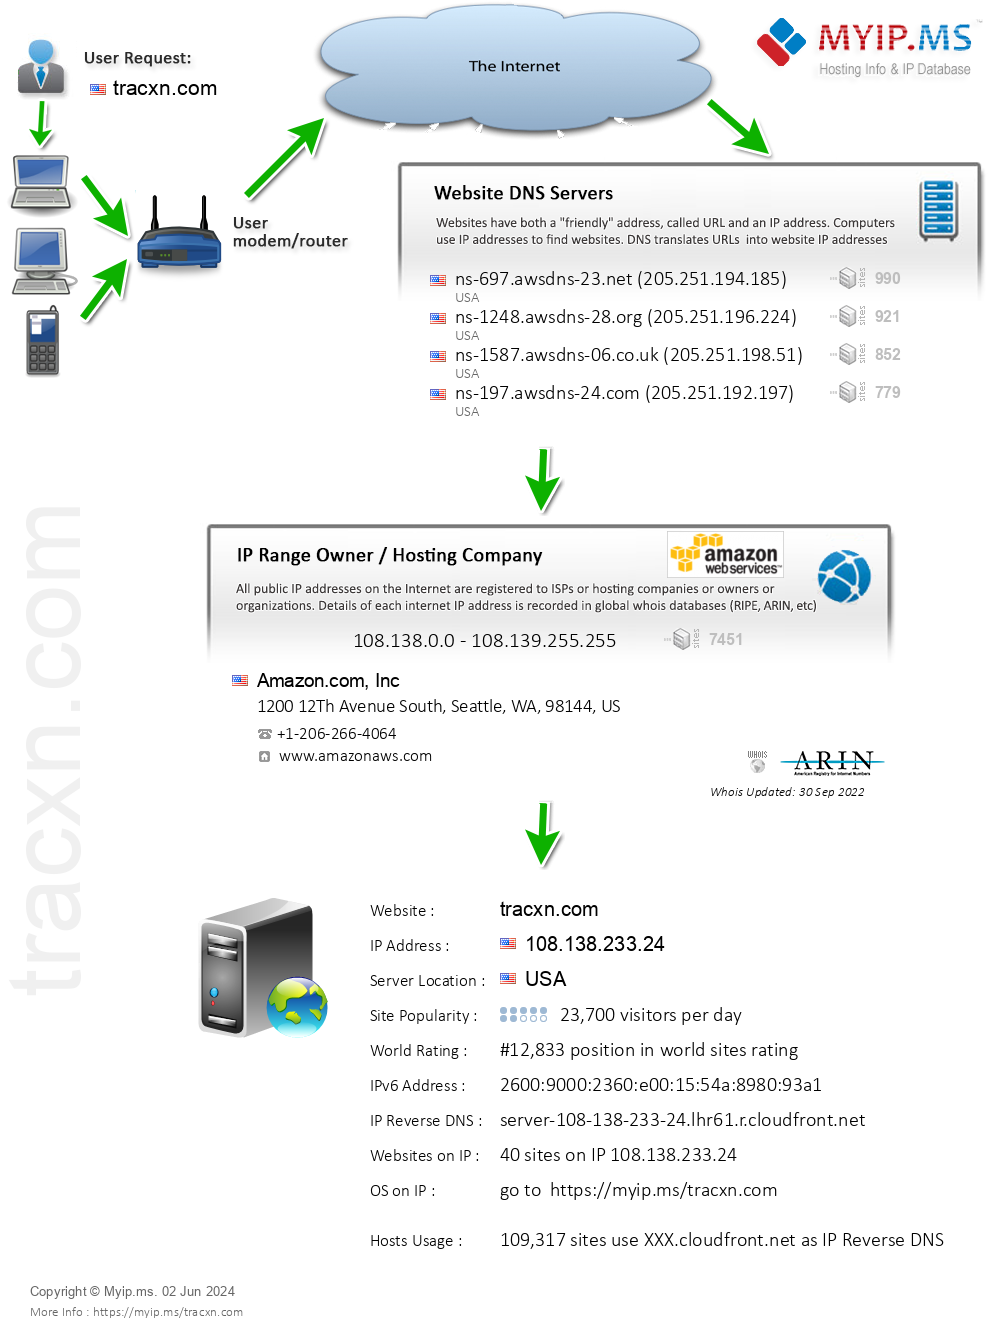 Tracxn.com - Website Hosting Visual IP Diagram